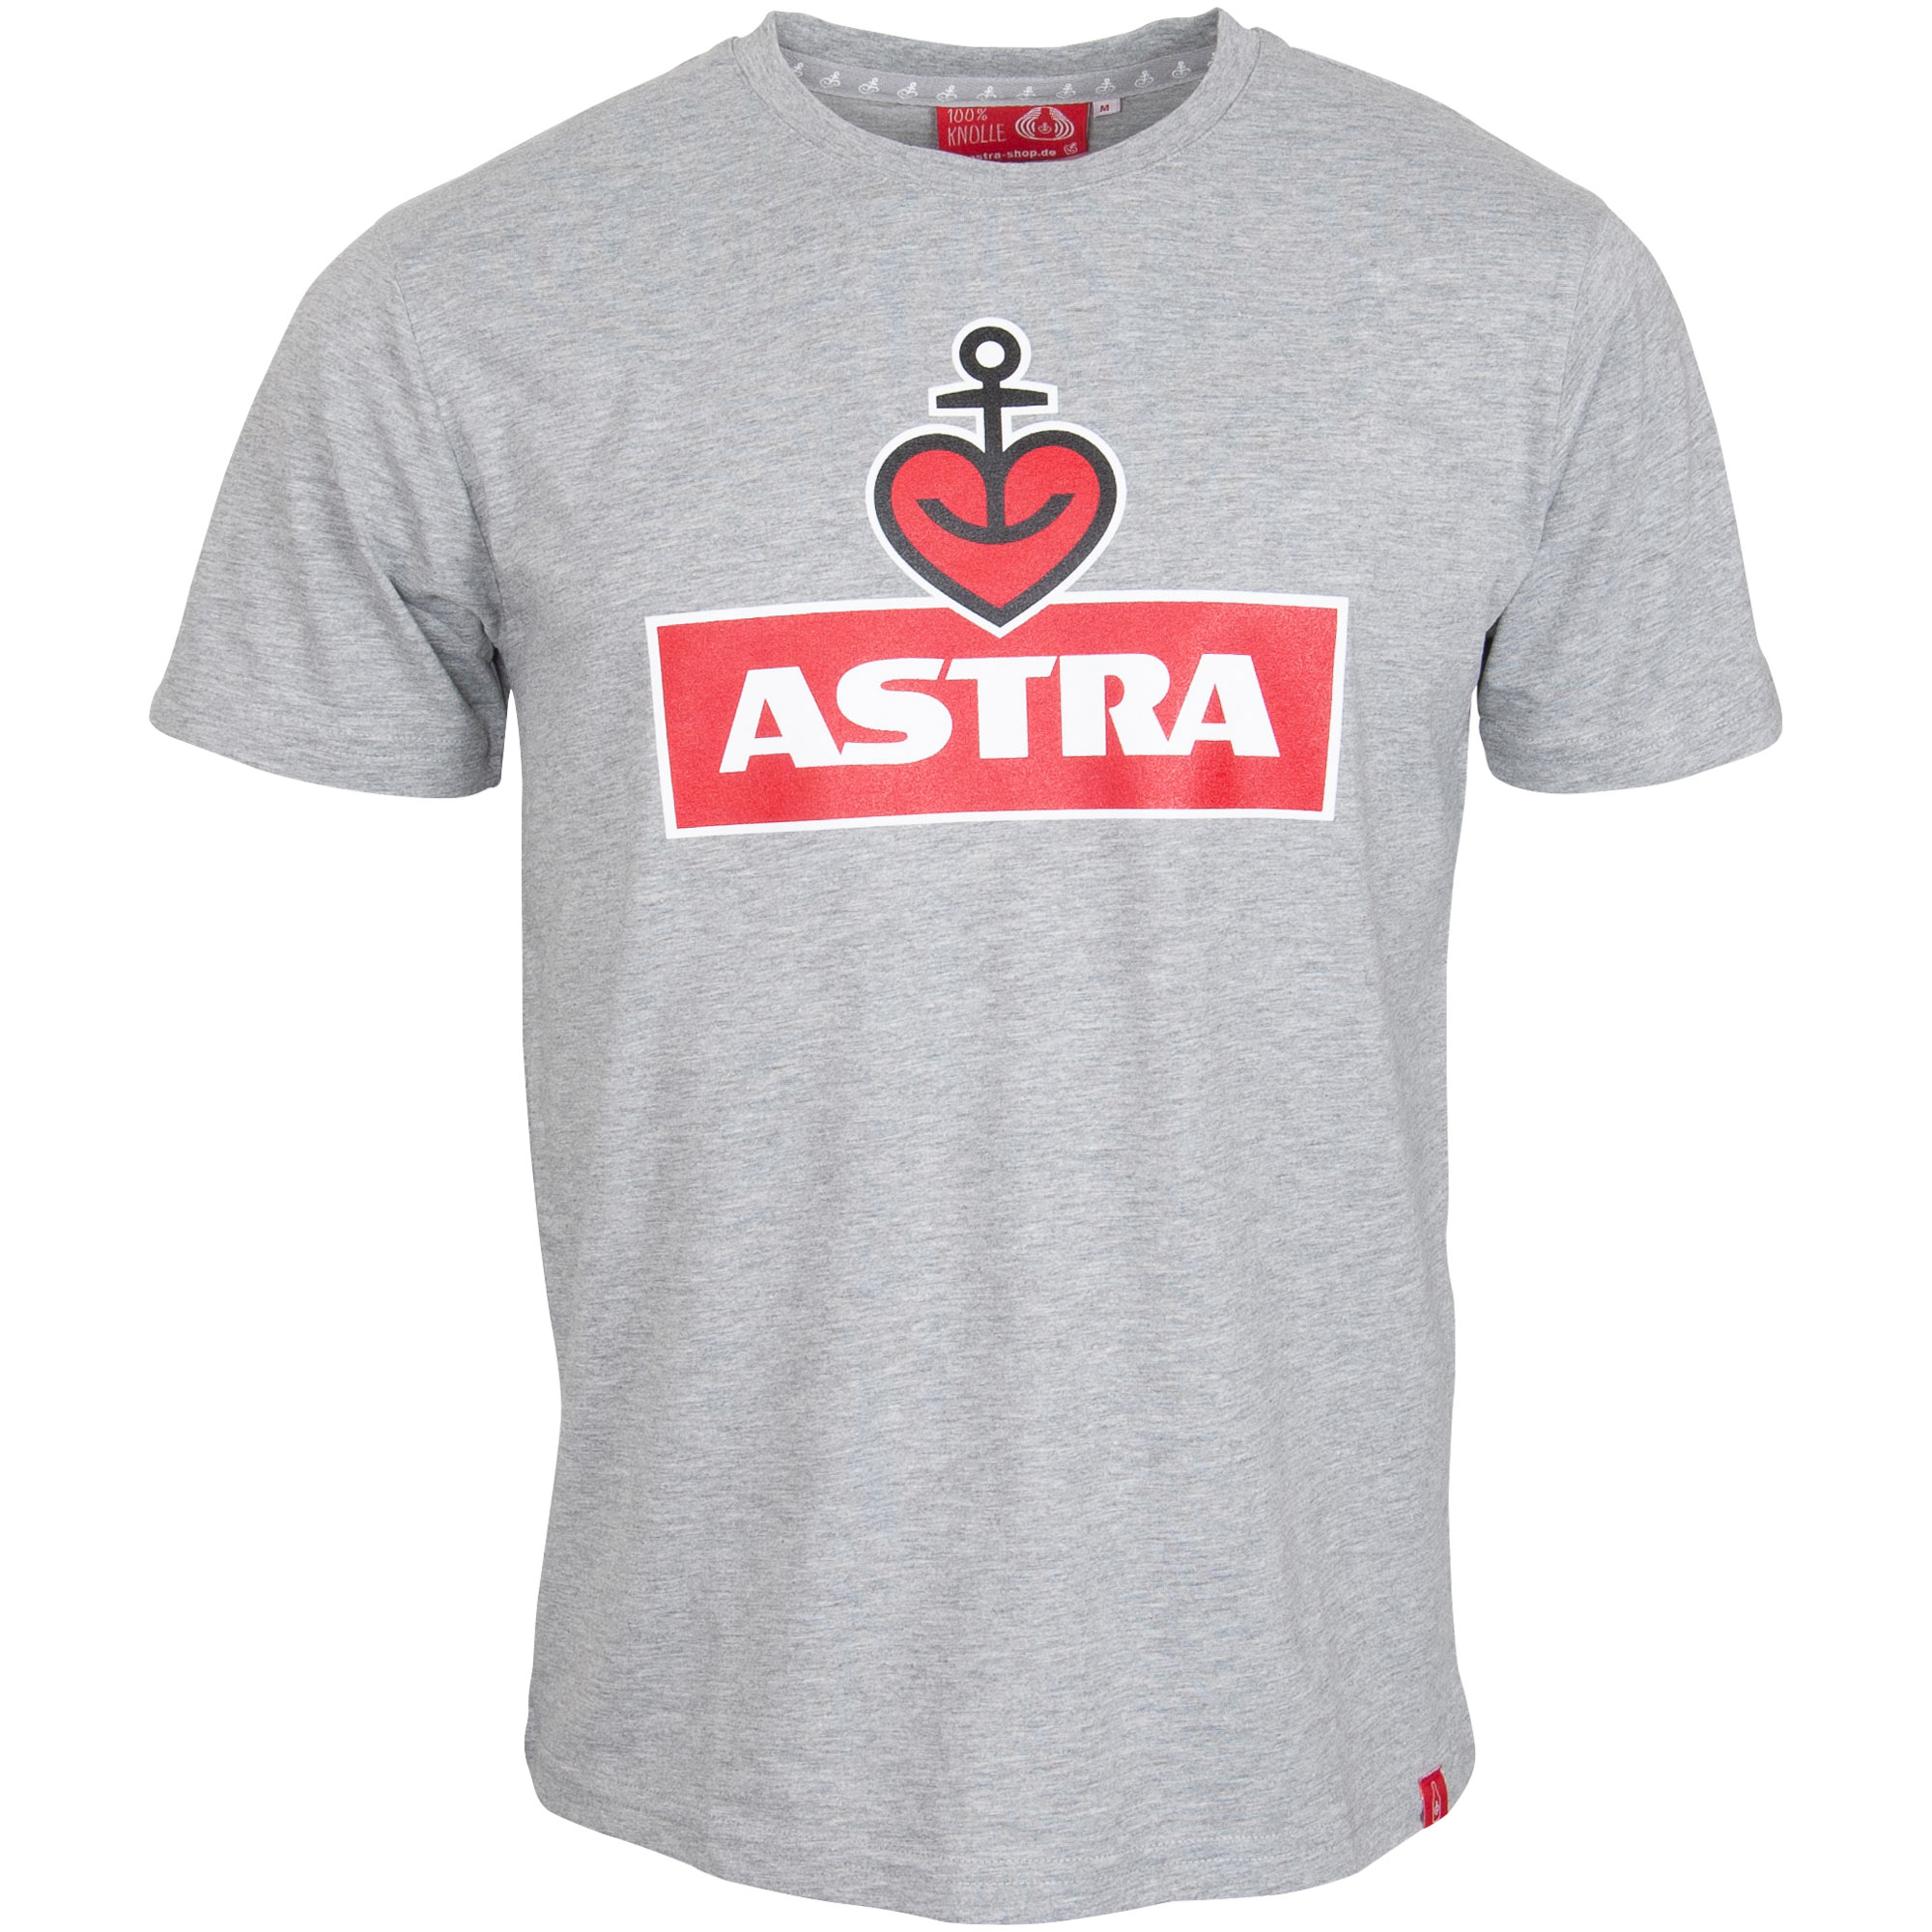 Astra - T-Shirt Logo - grau